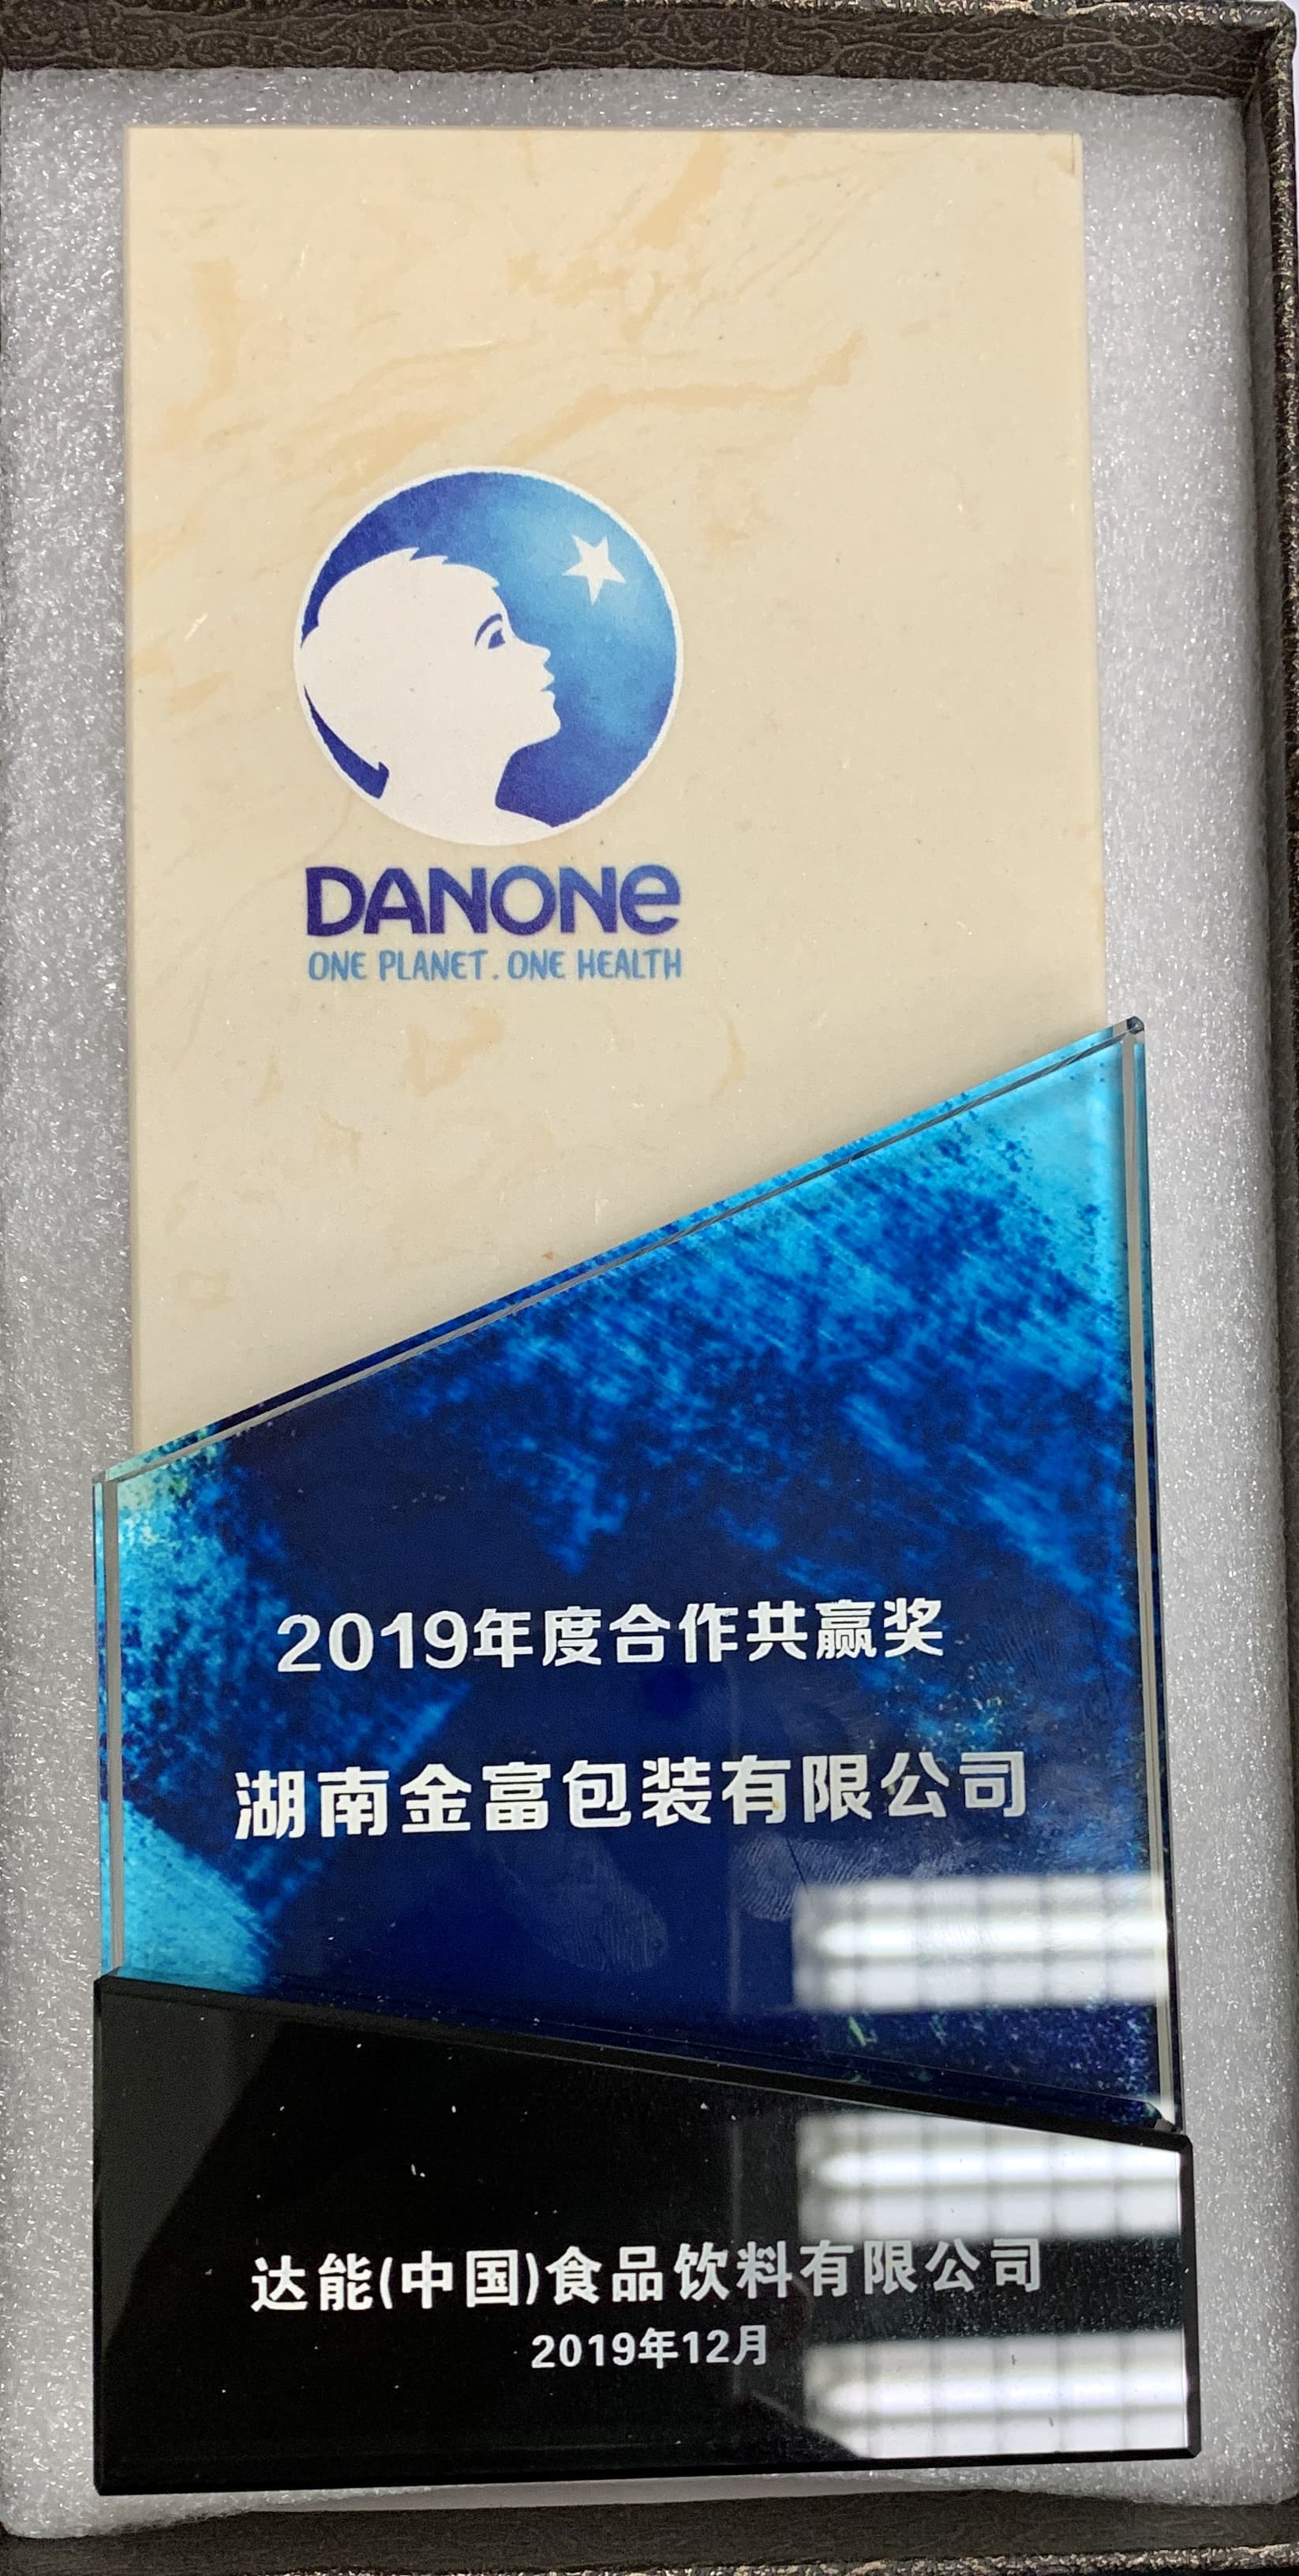 2019 Win-Win Partnership Award (Hunan Jinfu) - Presented by Danone China